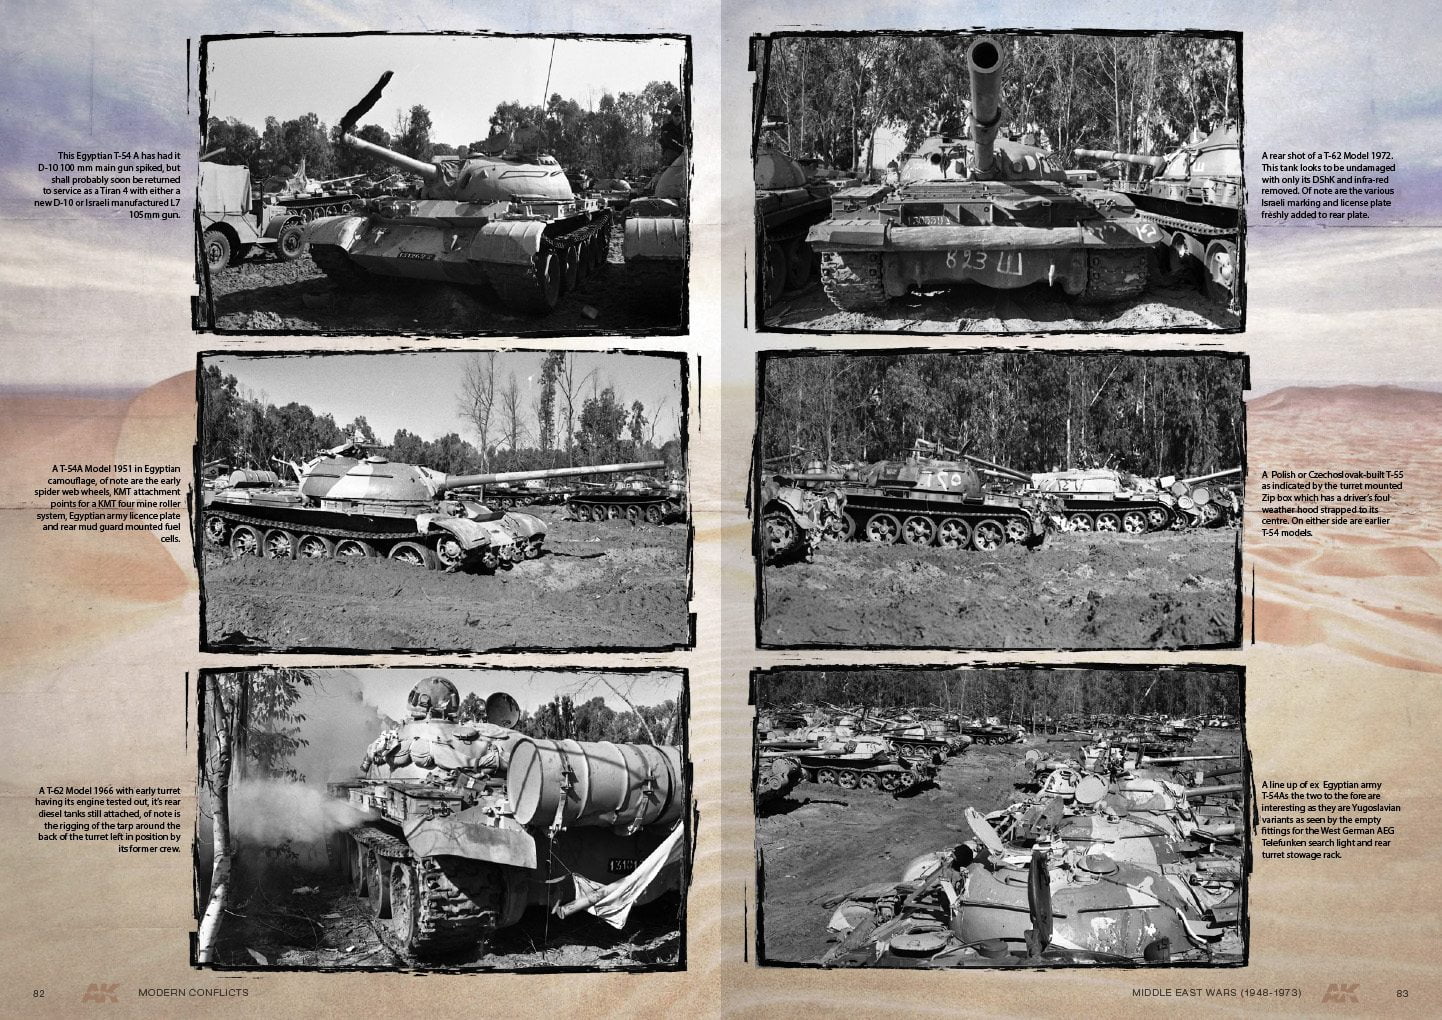 AK Interactive Middle East Wars 1948-1973 Volume 1 Profile Guide AKI ...